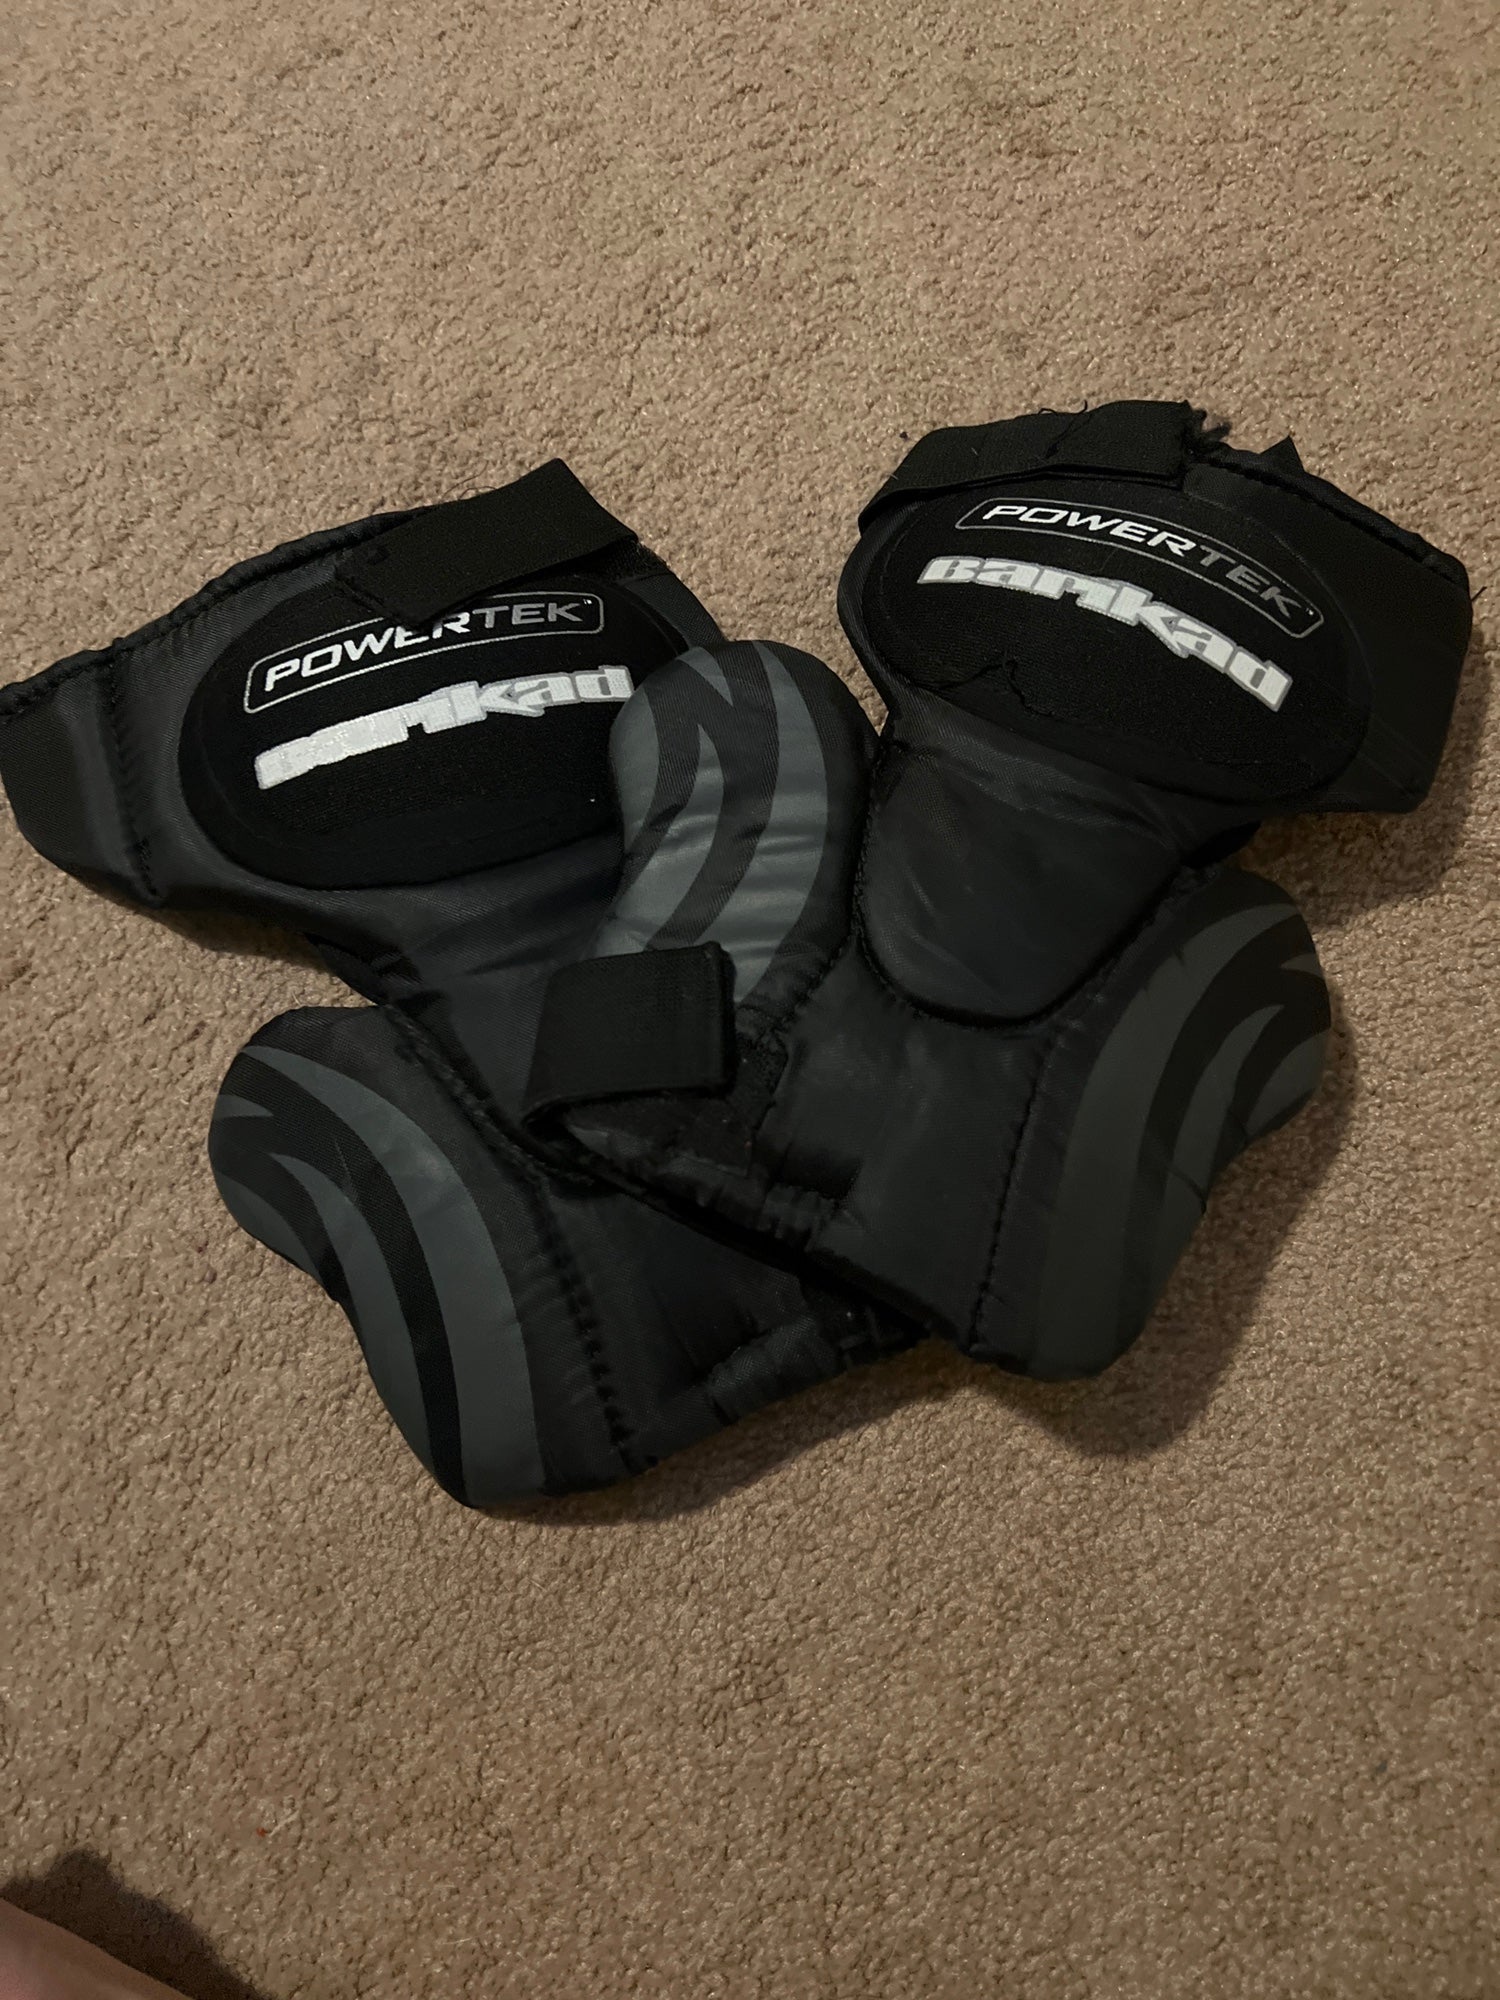 New Powertek Barikad junior knee guards thigh protector ice hockey goalie pads 